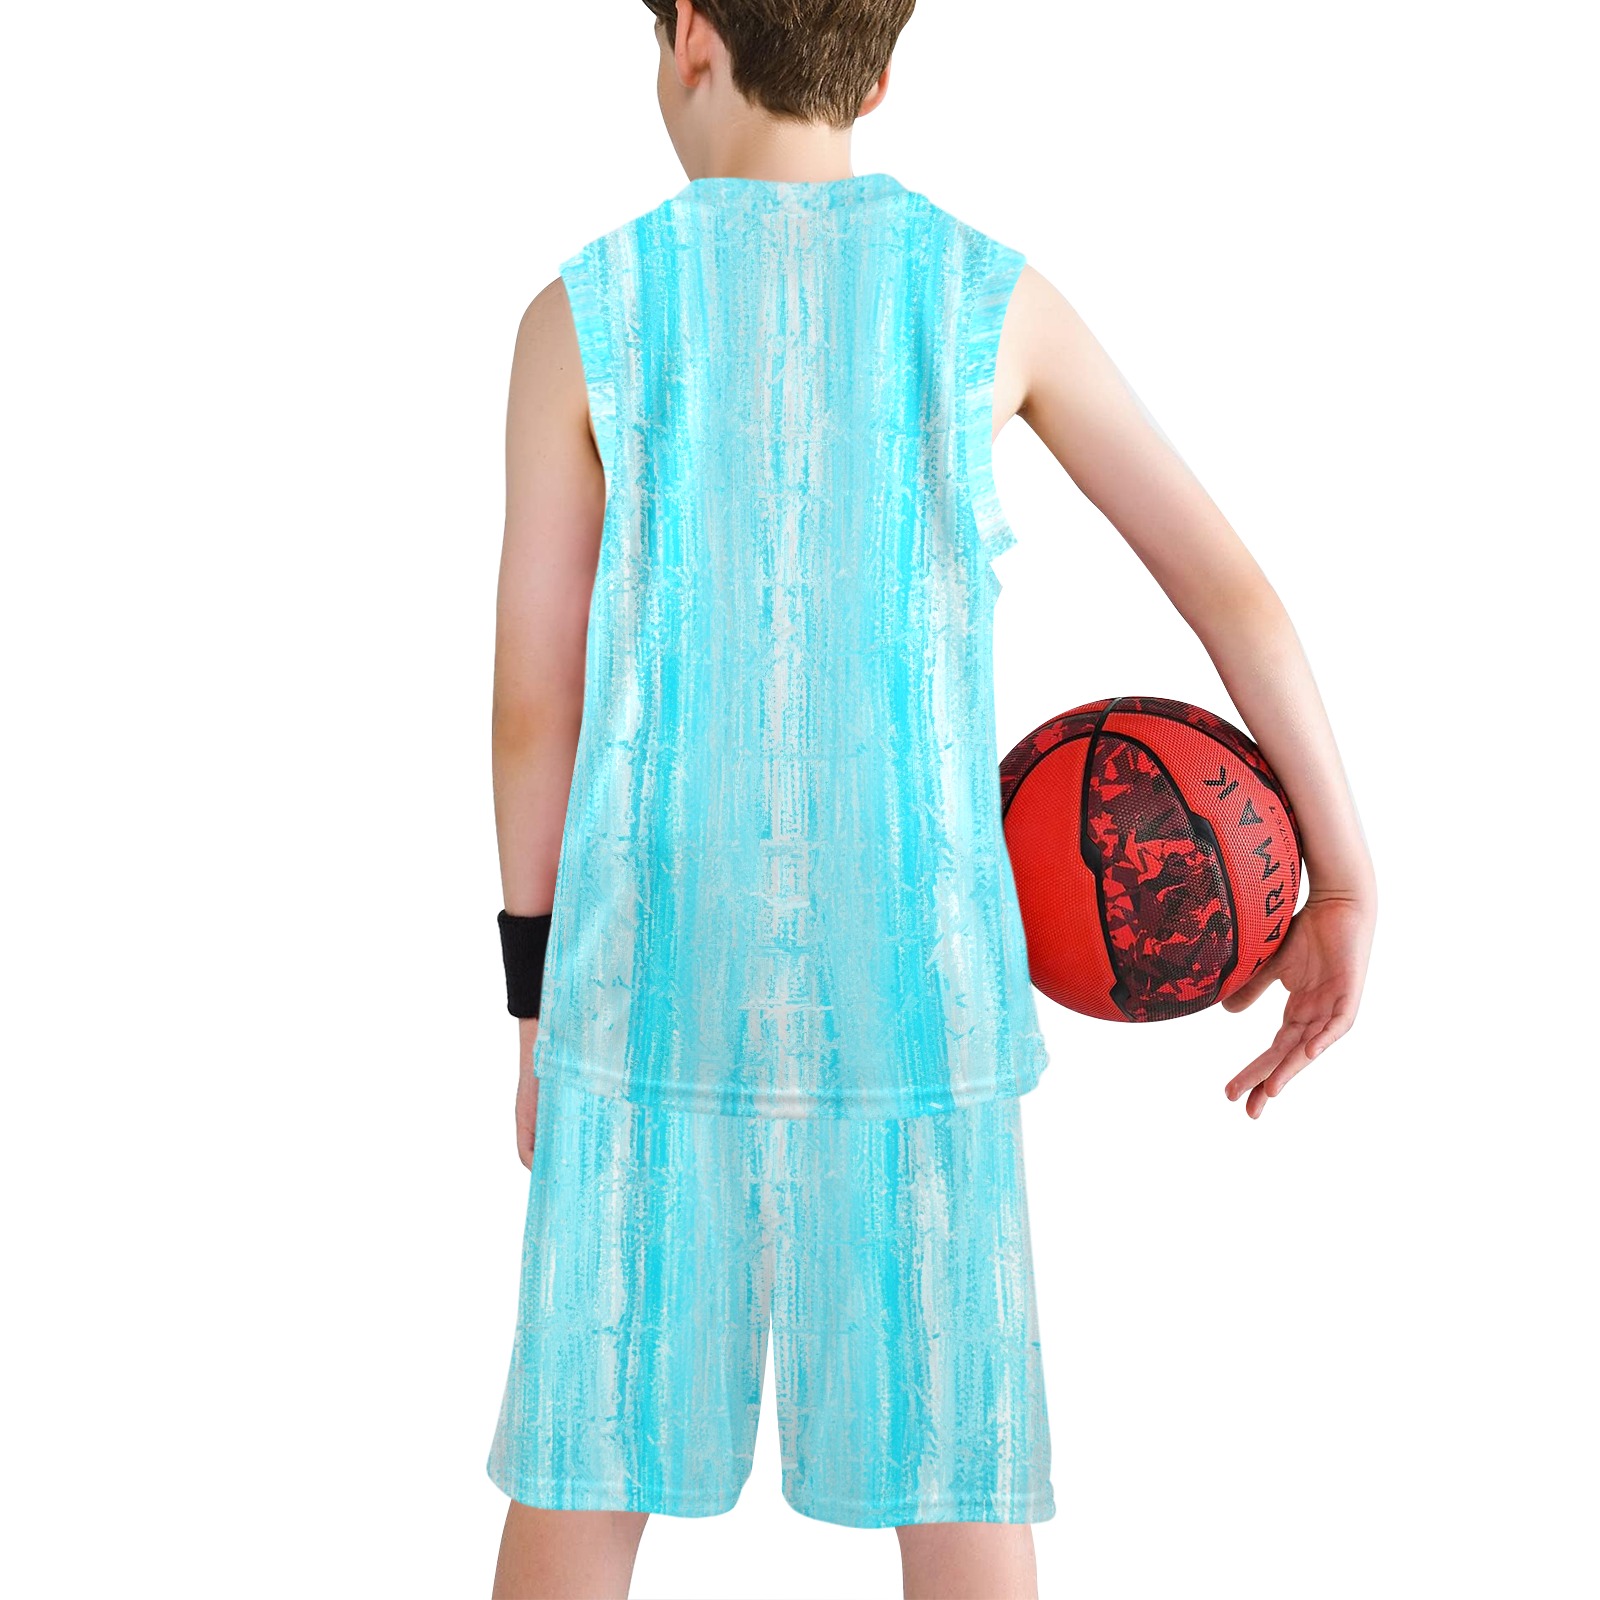 confetti 11 Boys' V-Neck Basketball Uniform